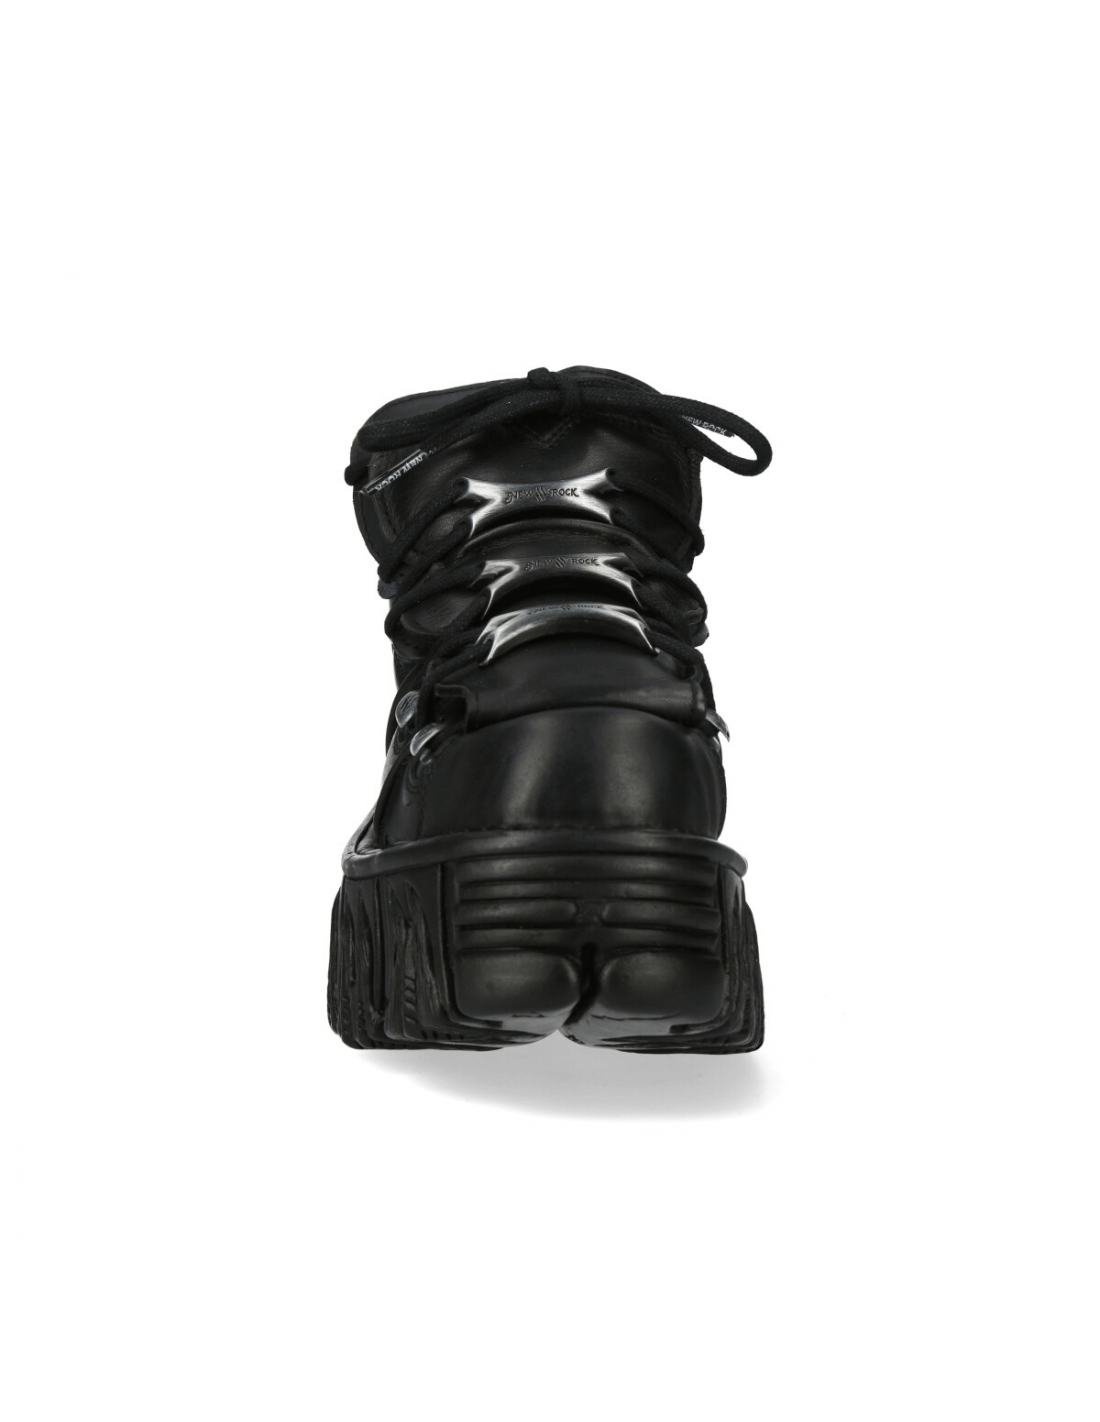 NEW ROCK Black Platform Ankle Boots With Studded Design